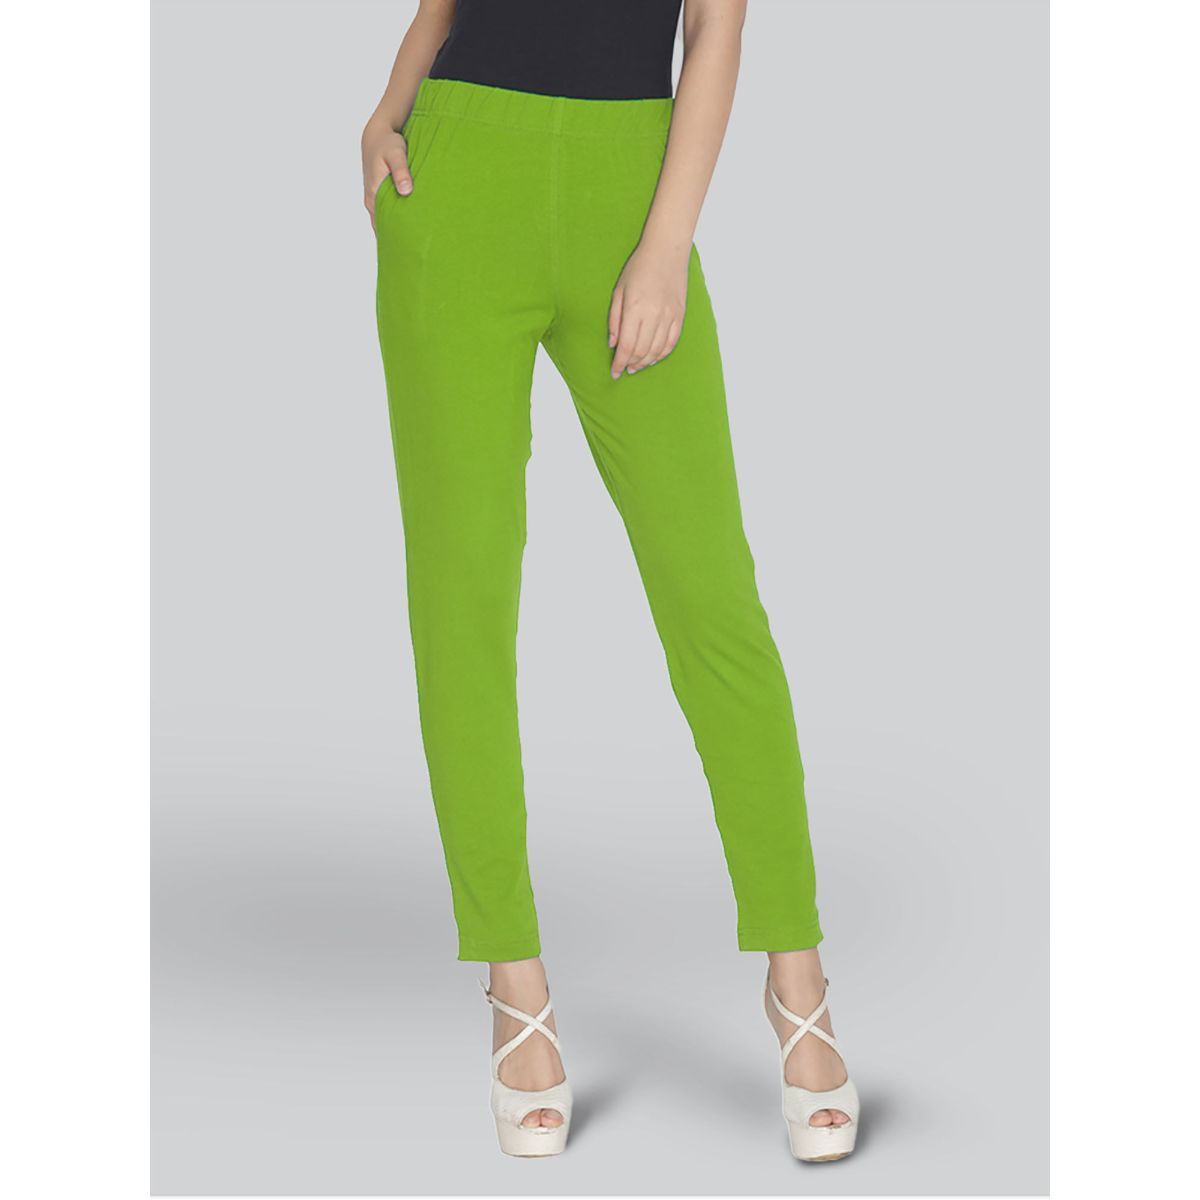 Buy Lime Green Leggings for Women by LYRA Online | Ajio.com